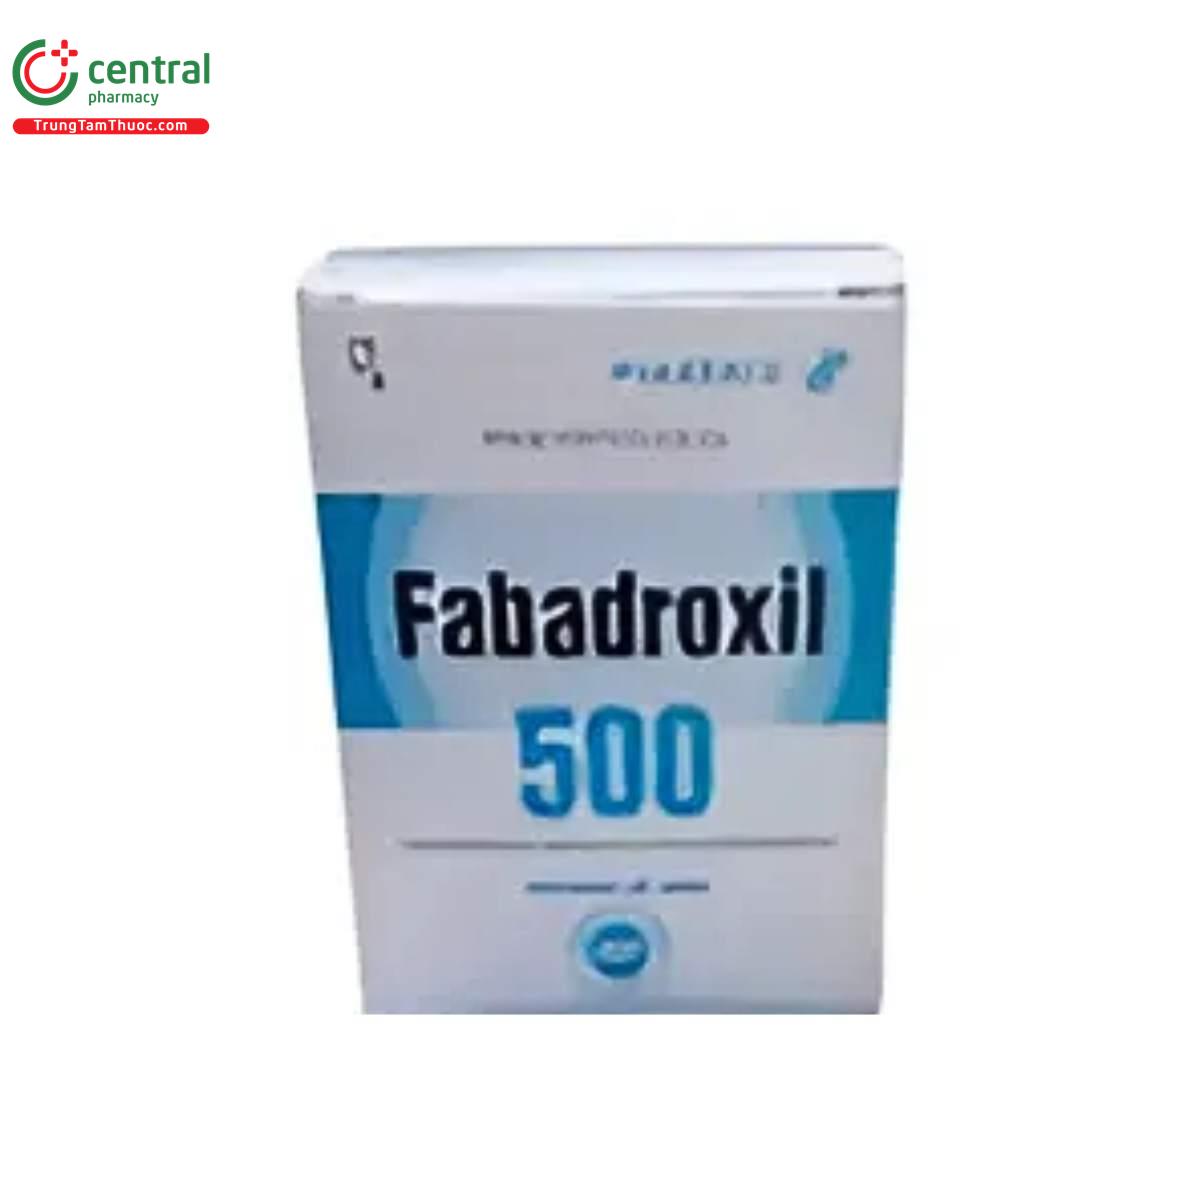 fabadroxil 500 2 E1872